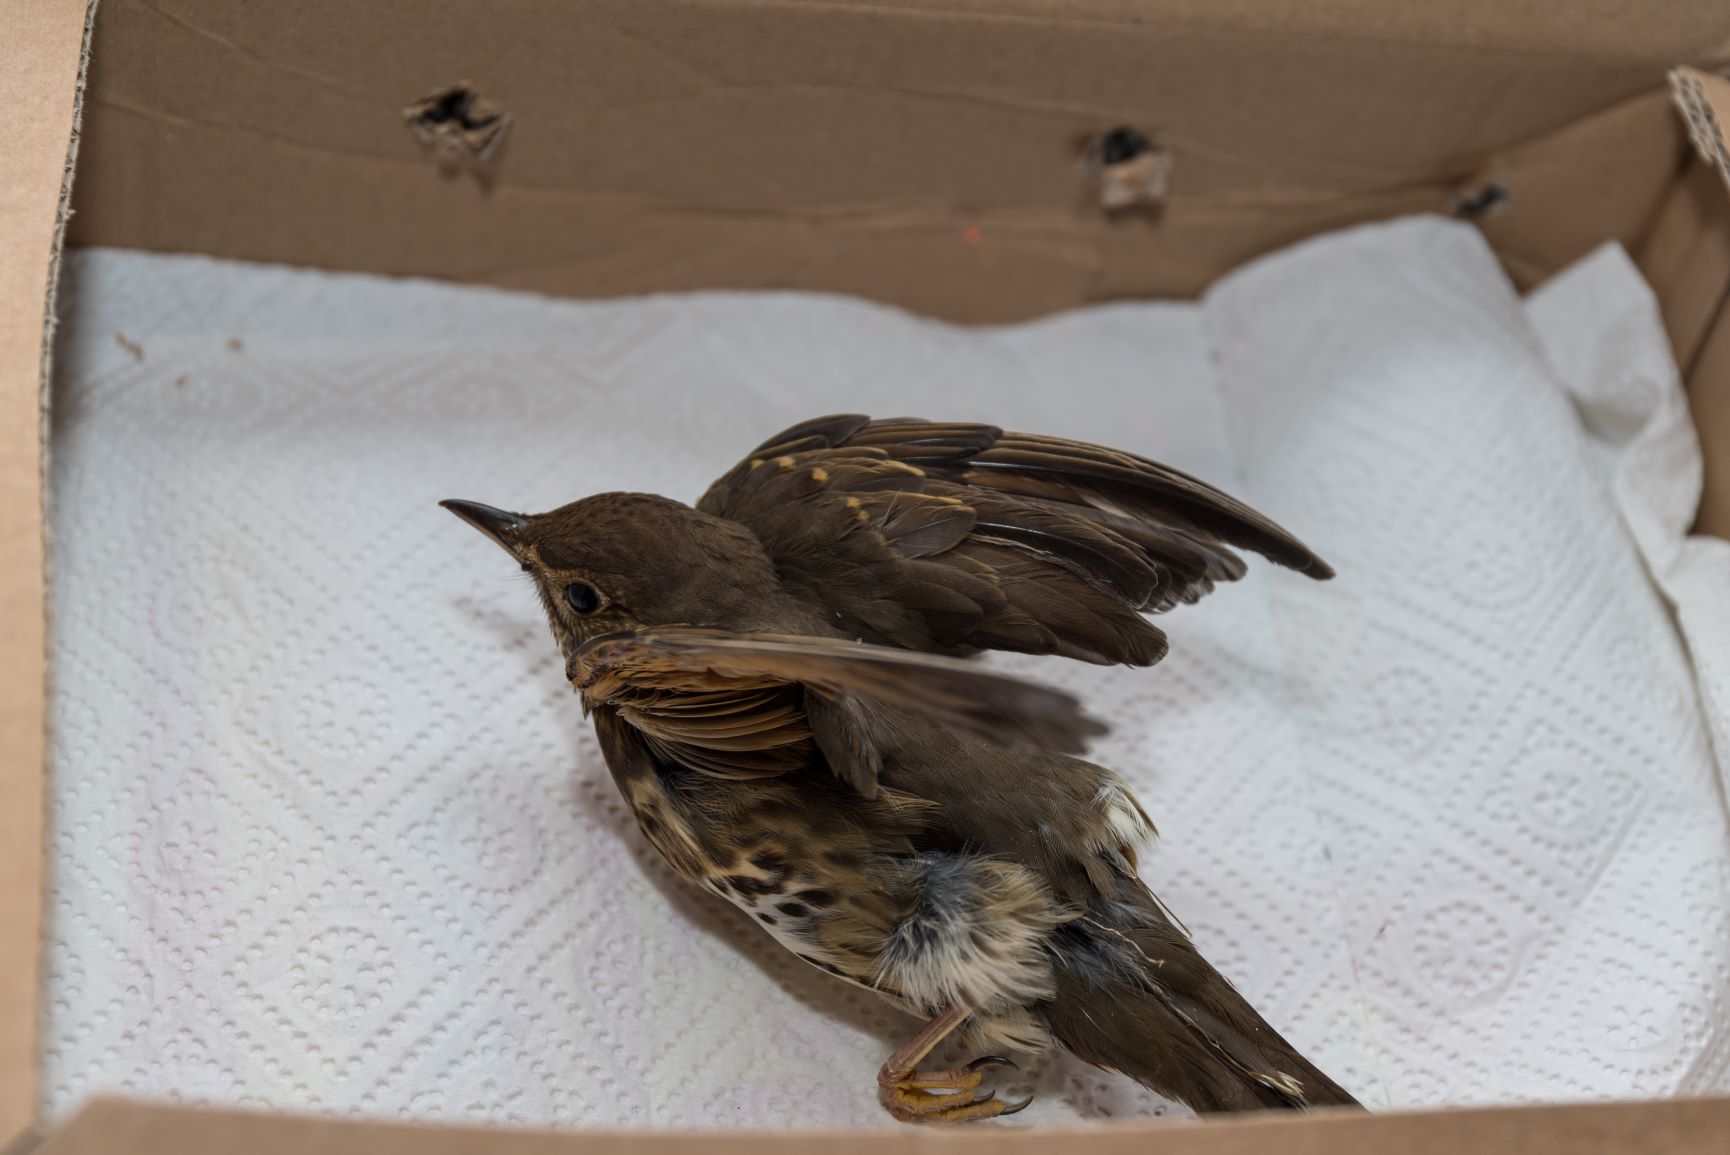 injured wild bird in cardboard box